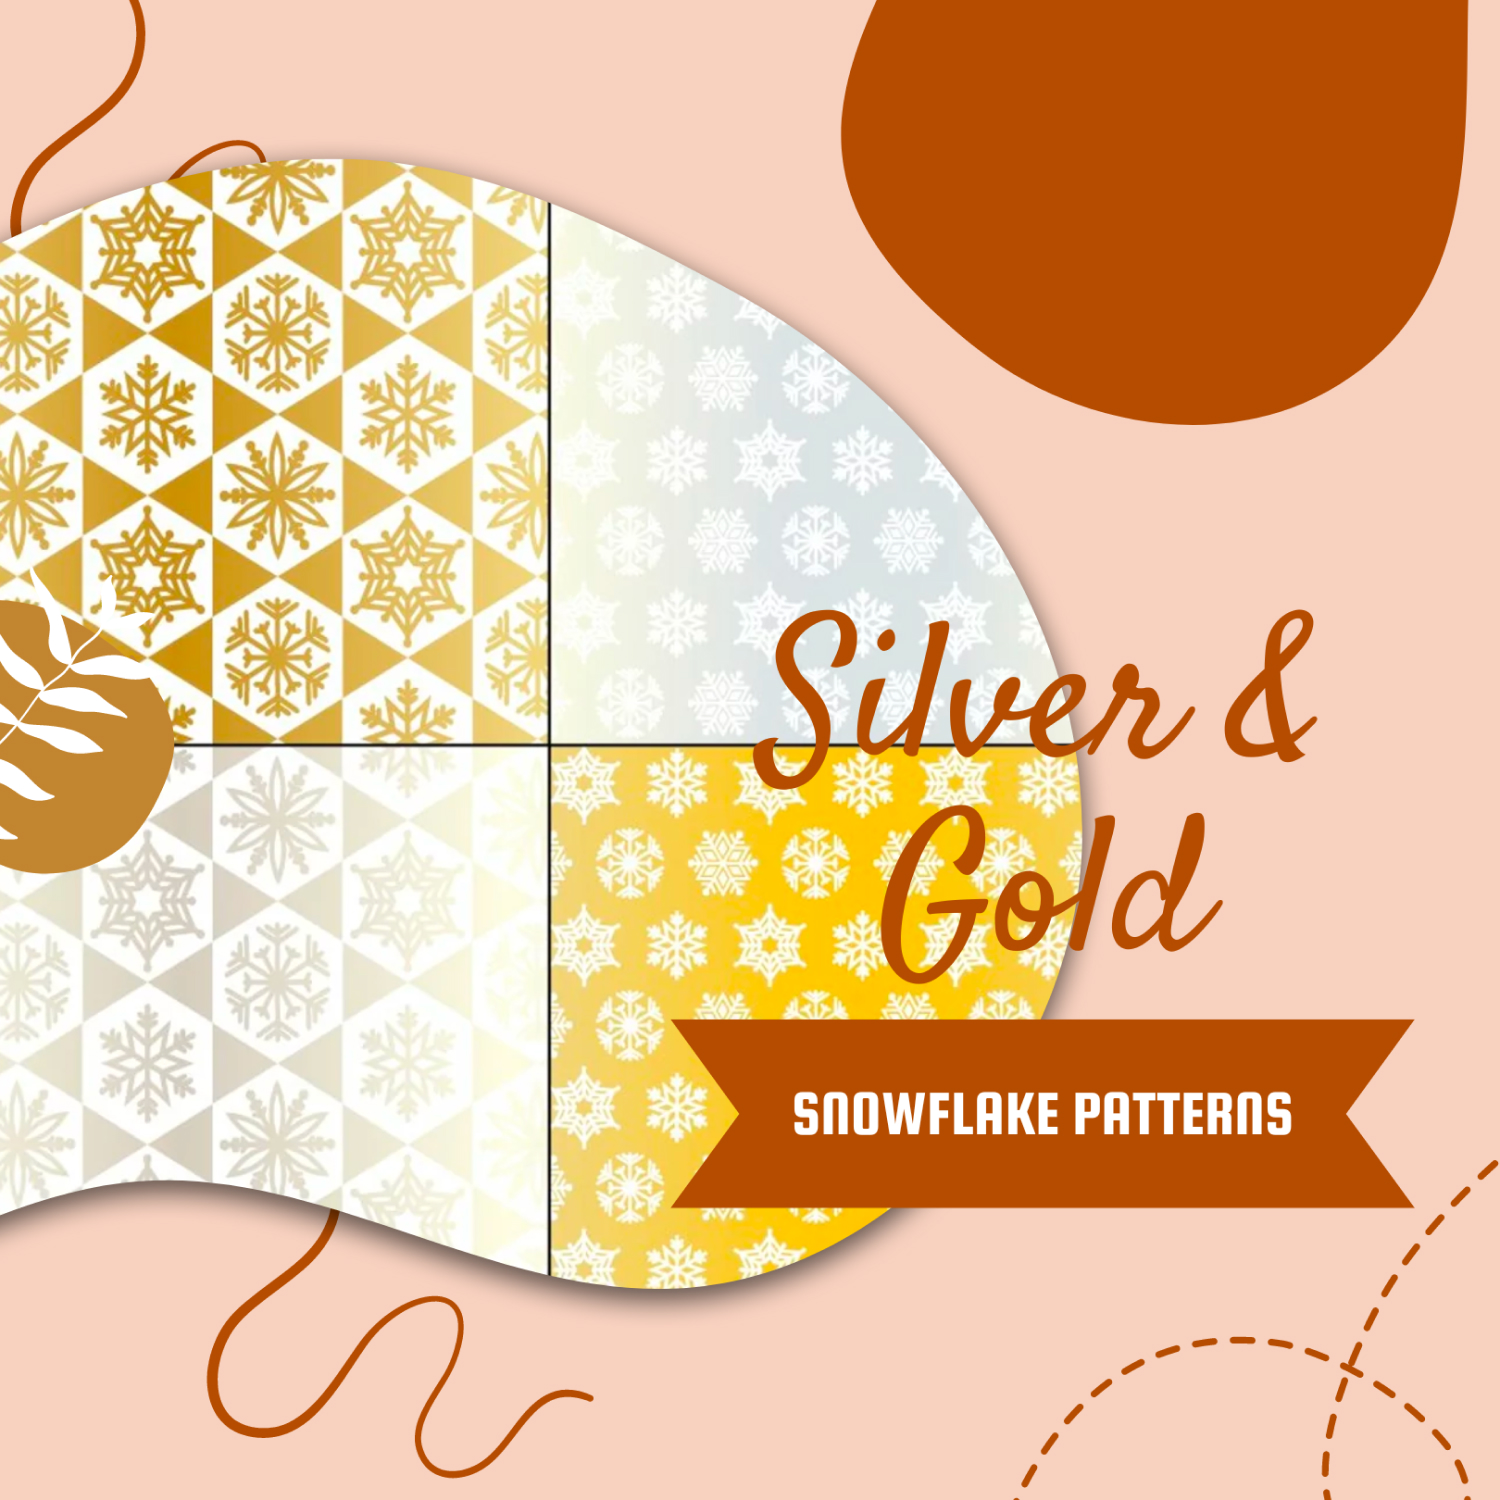 Seamless Silver & Gold Snowflake Patterns.